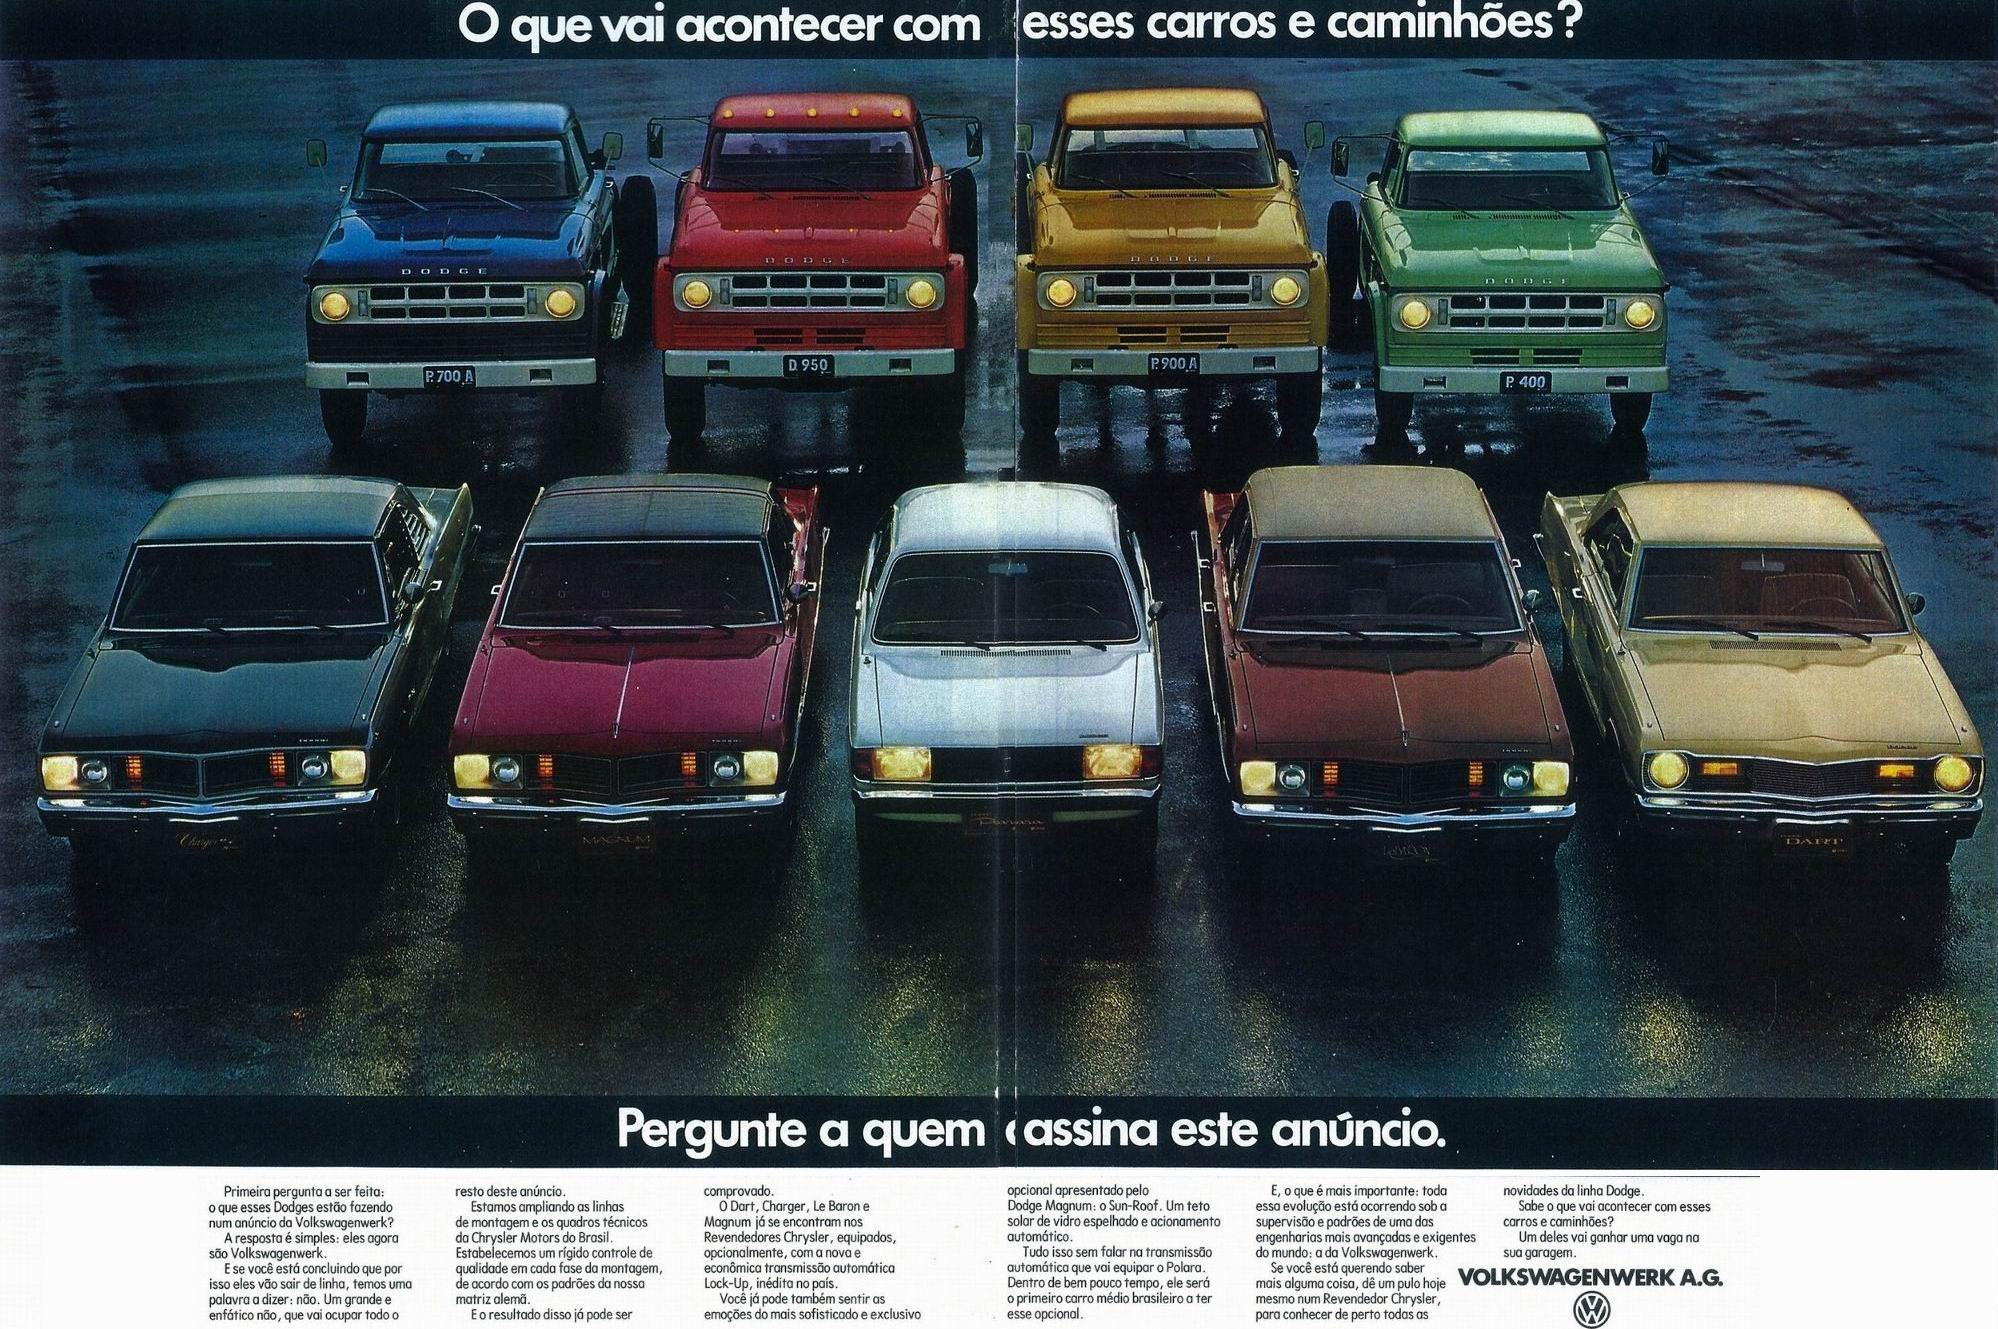 CC And Vintage Review 1969 Dodge Dart 2-Door Hardtop - Swinger Or Solid Citizen? pic